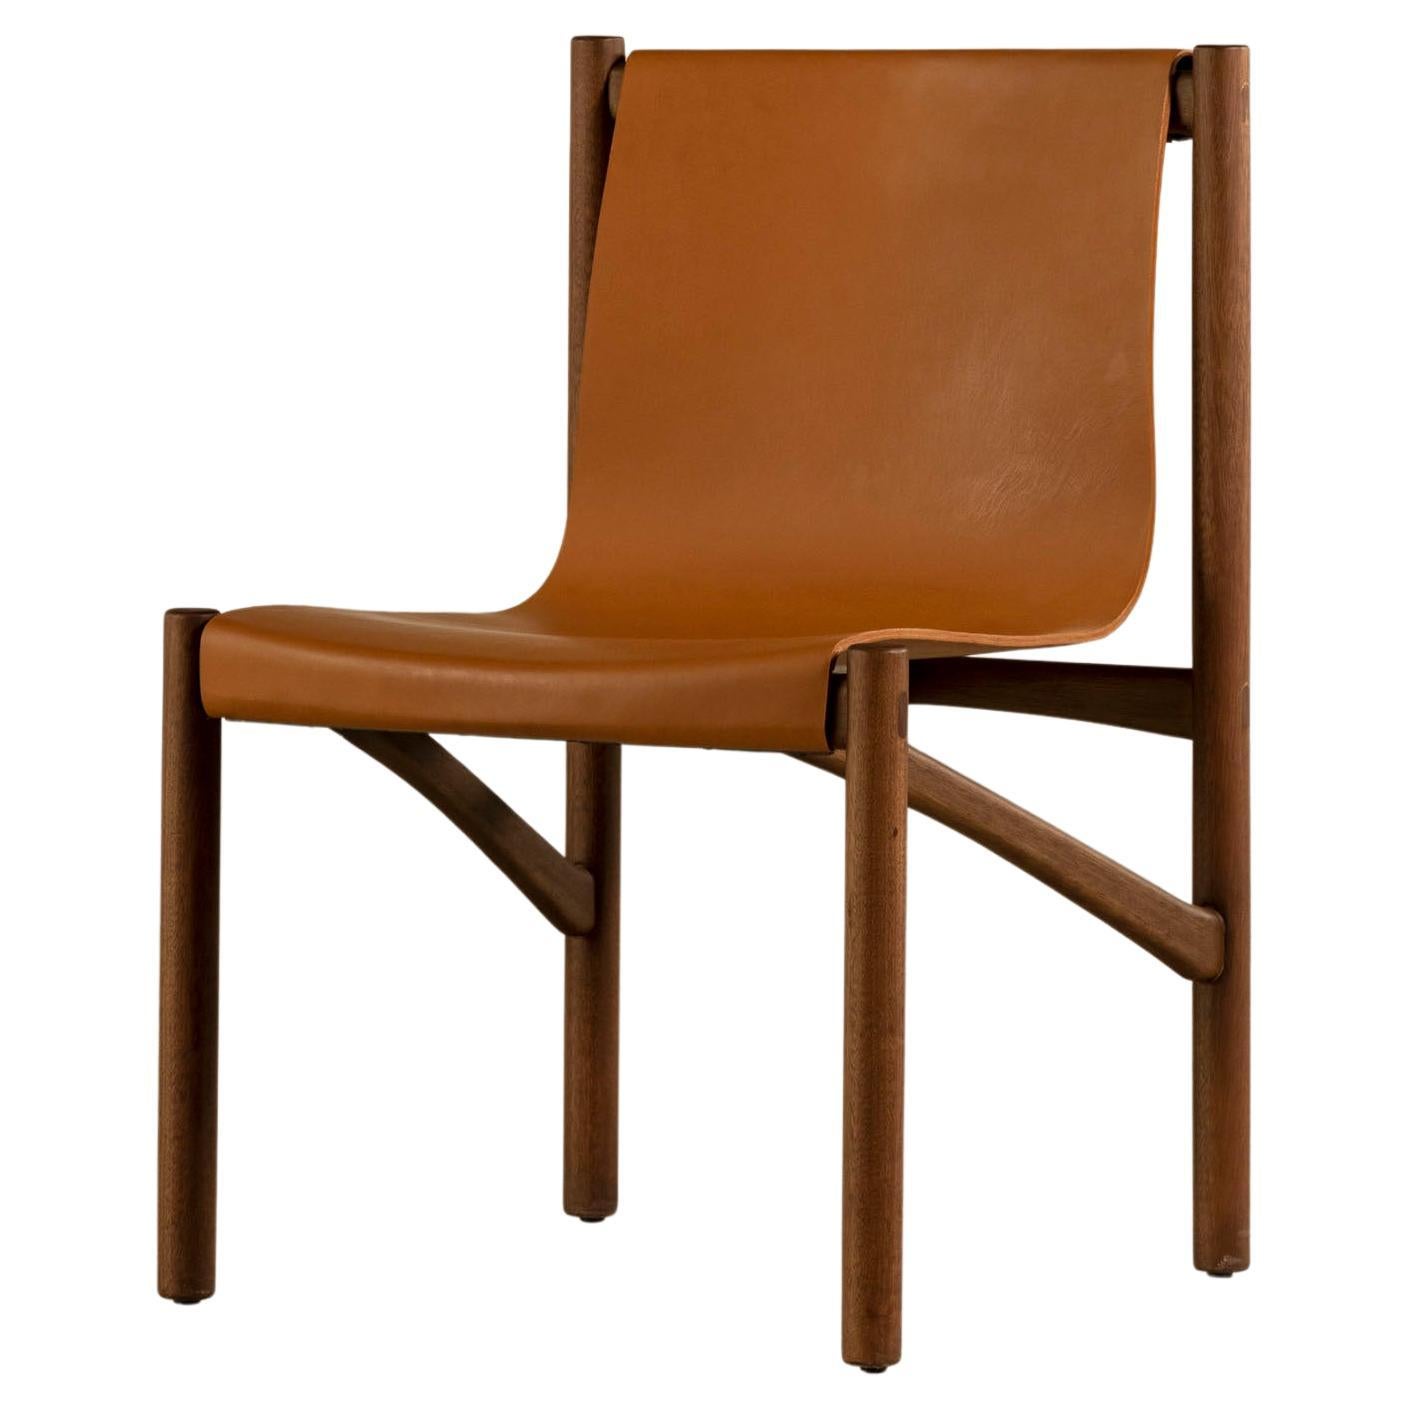 "Frevo" Chair by Ronald Sasson, Brazilian Contemporary Design For Sale